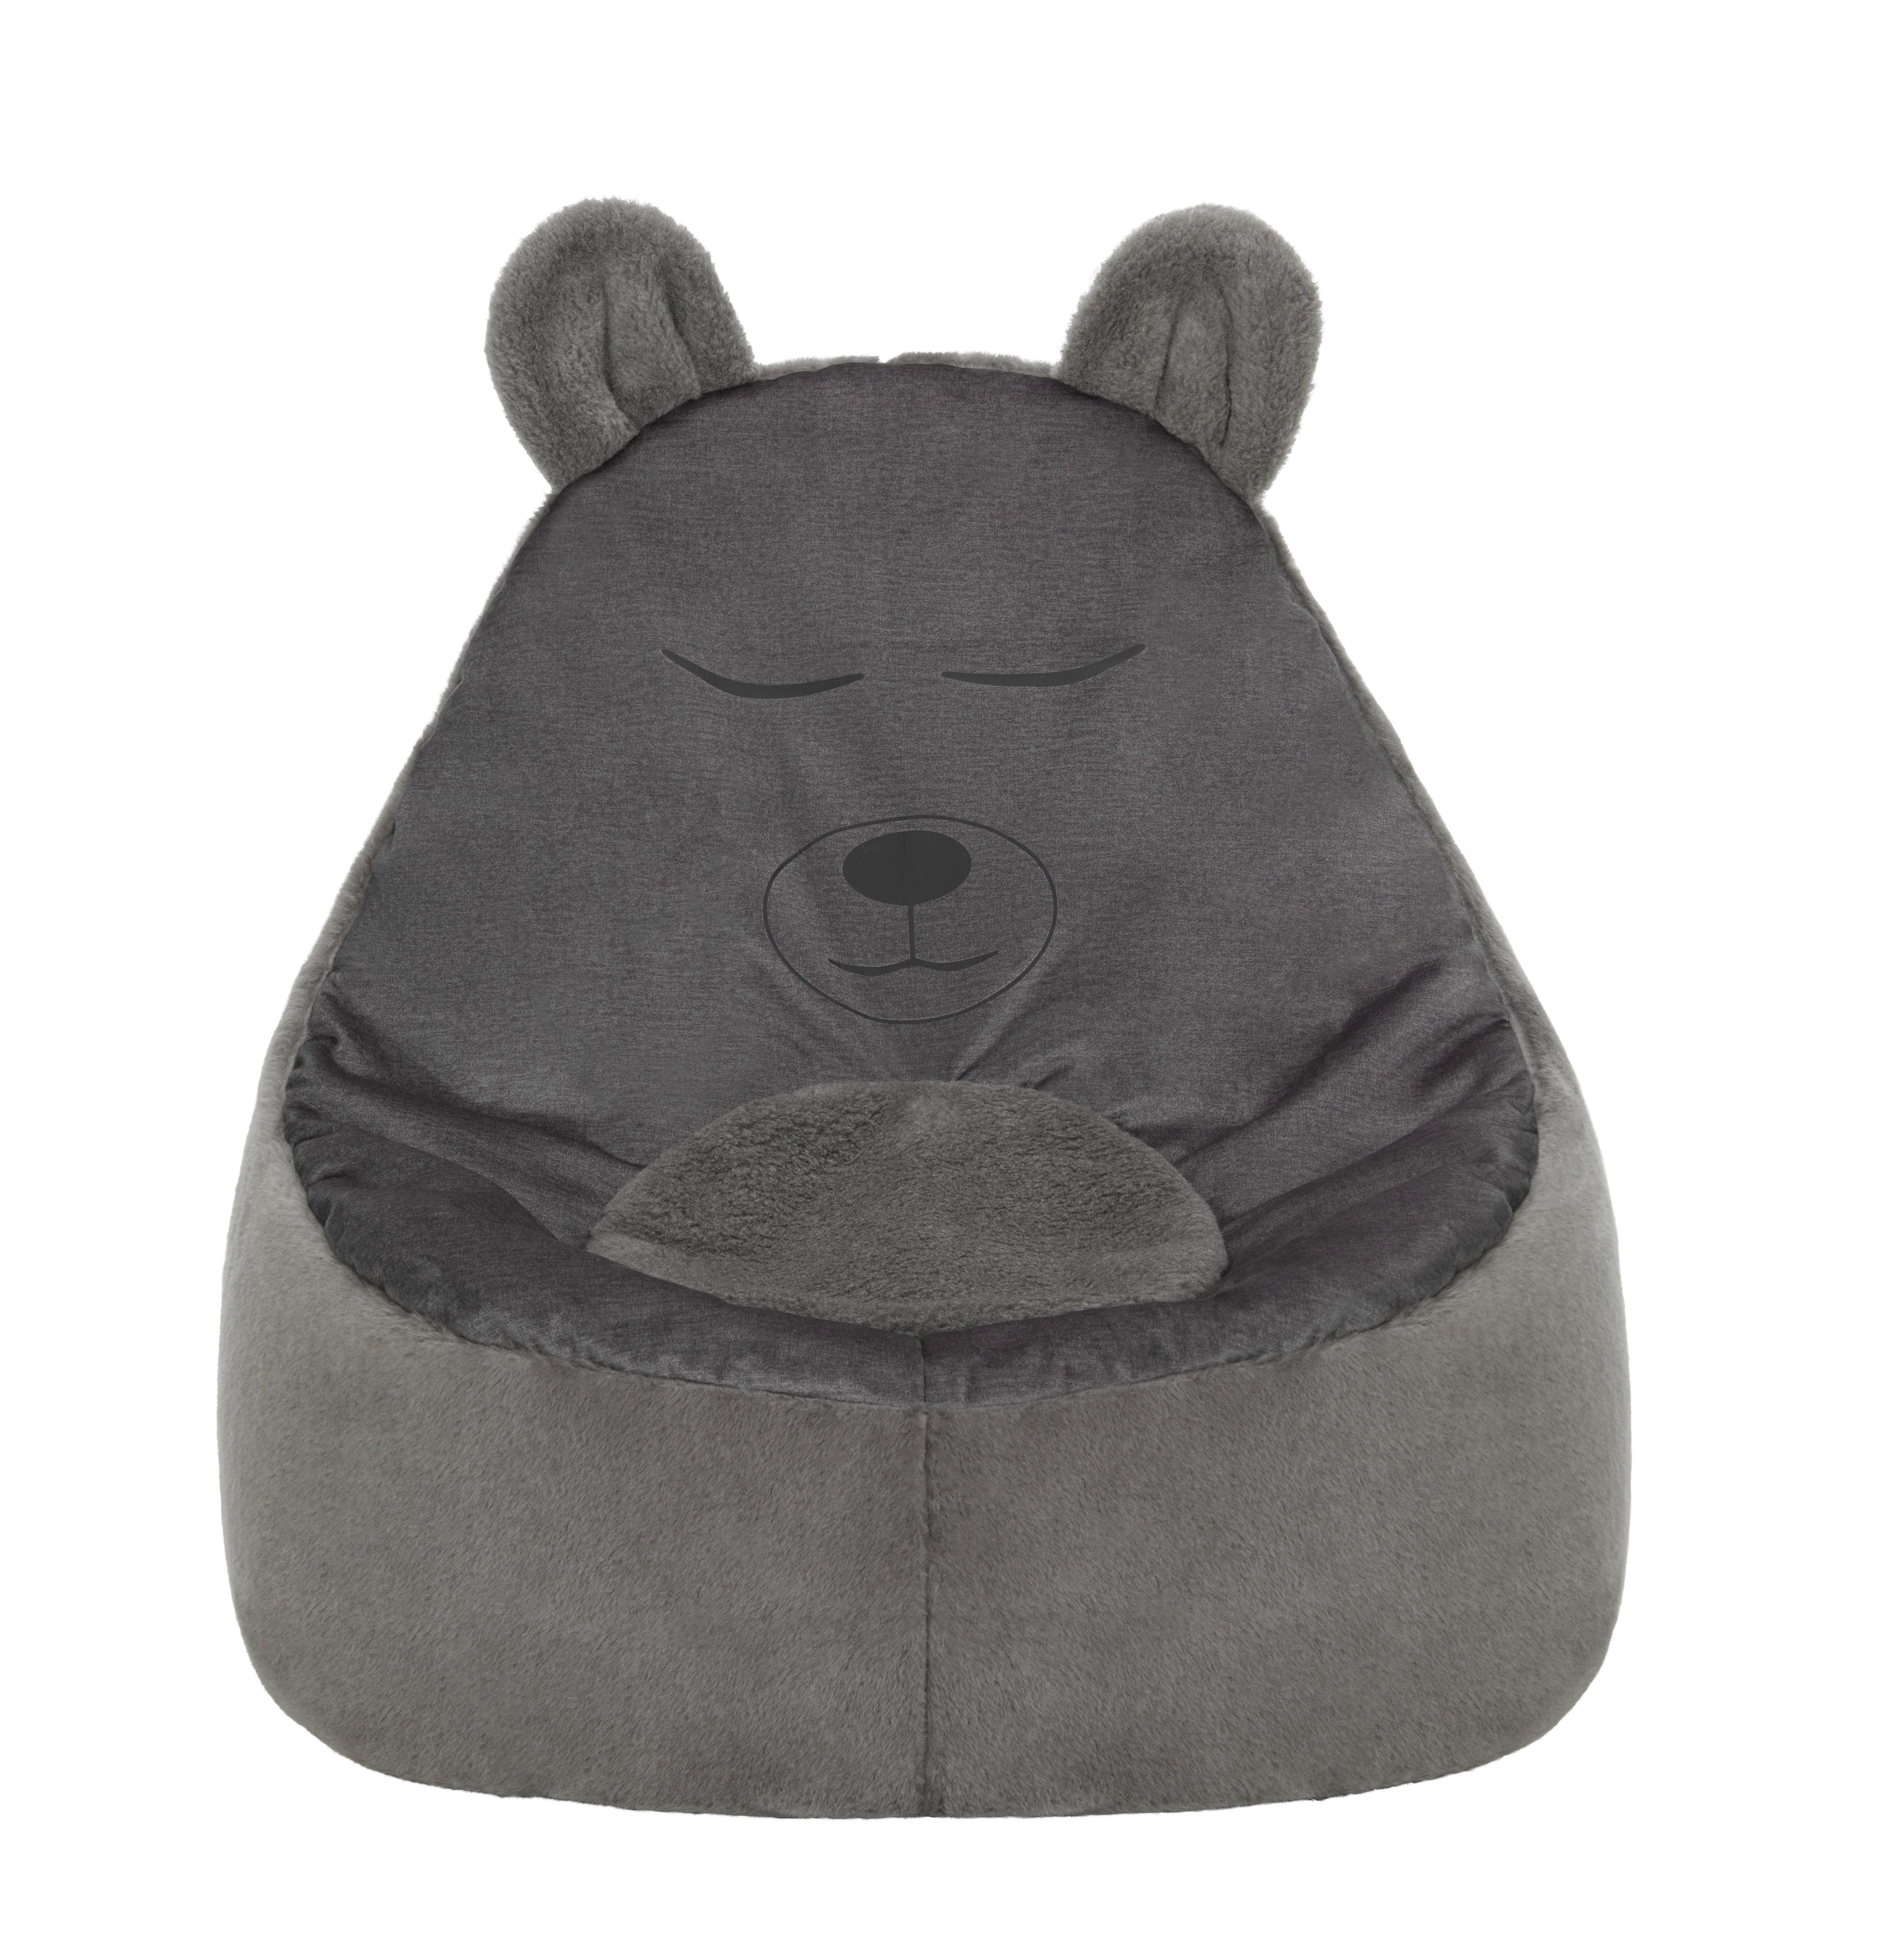 Gyerekfotel Maci Forma Sleeping Bear - Antracit, Textil (65/80/65cm) - Modern Living